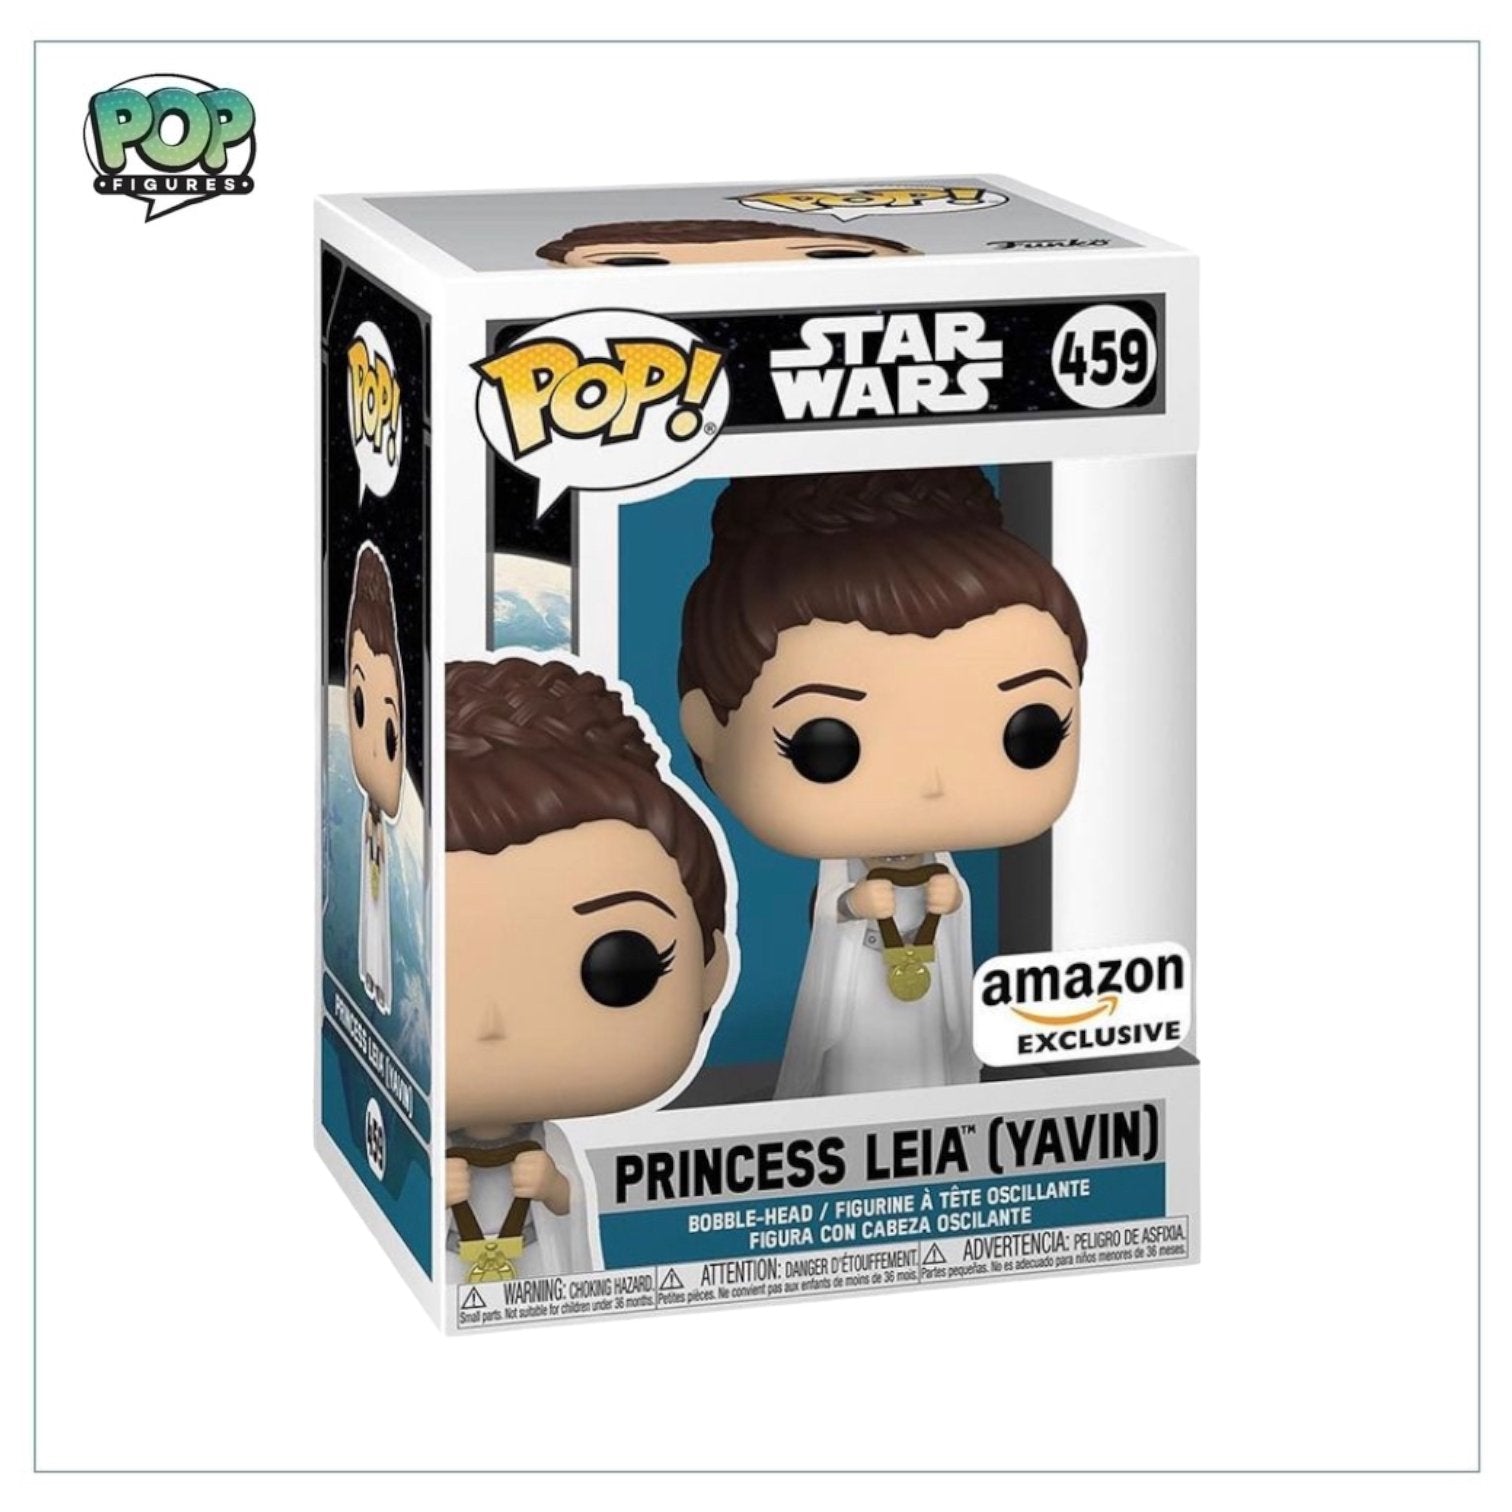 Princess Leia (Yavin) #459 Funko Pop! Star Wars - Amazon Exclusive - PREORDER - Pop Figures | Funko | Pop Funko | Funko Pop